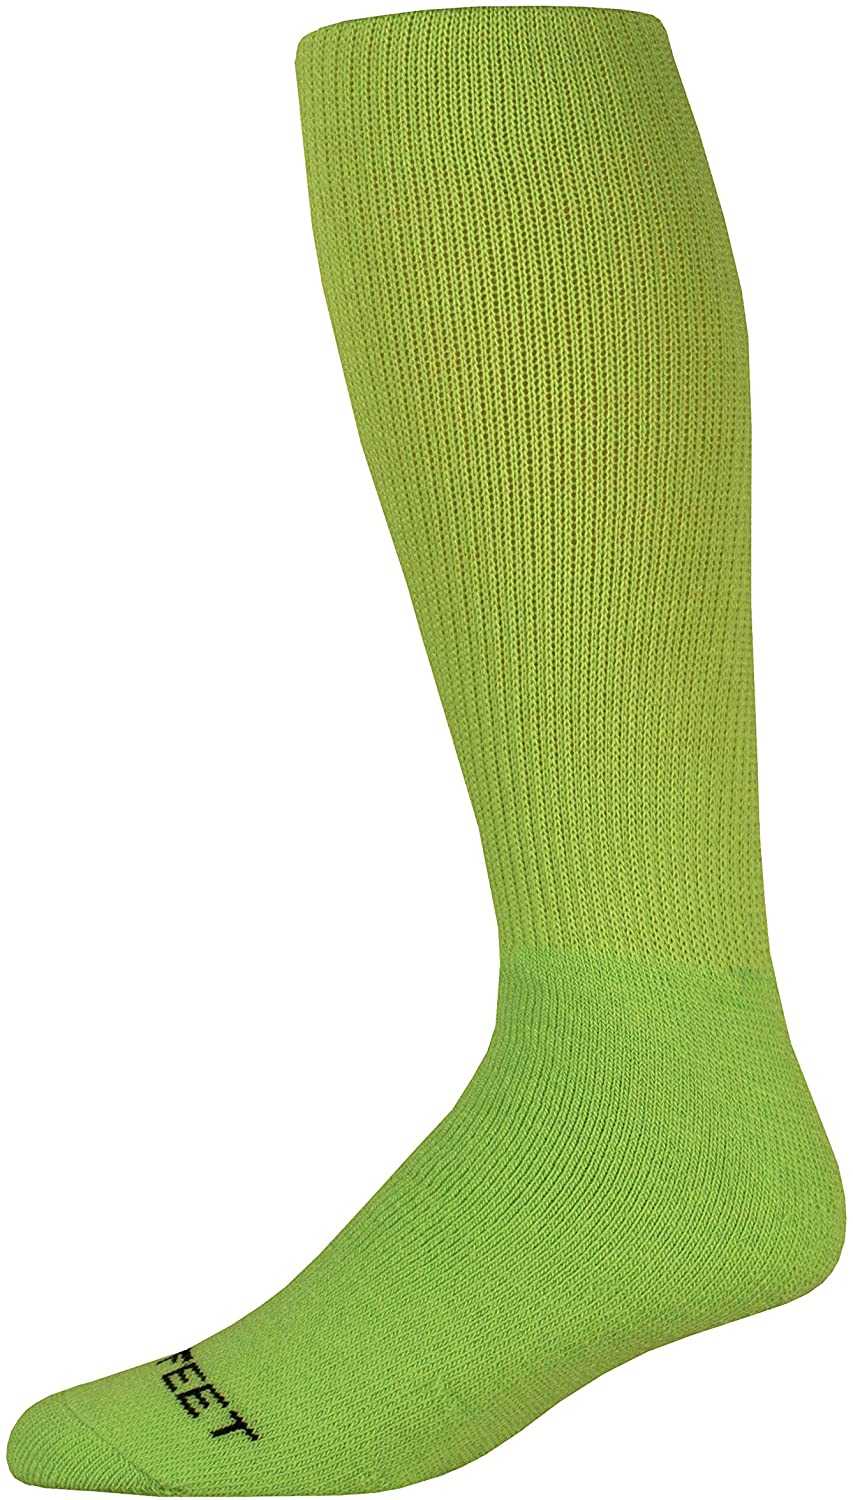 Pro Feet 294-296 Active Knee High Socks - Neon Green - HIT a Double